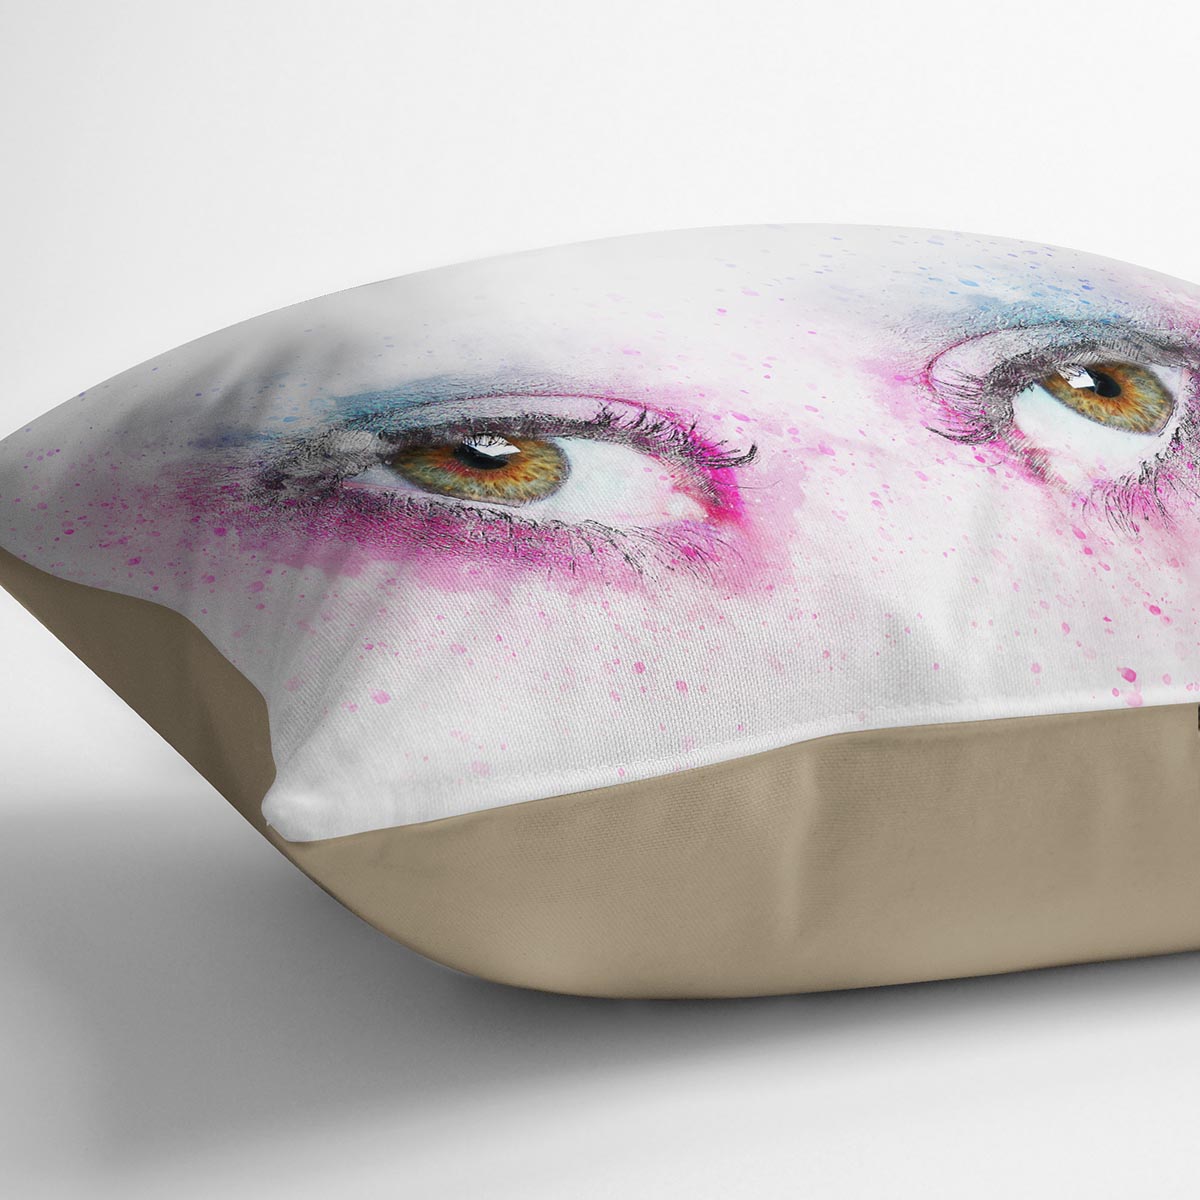 Eye Painting Cushion